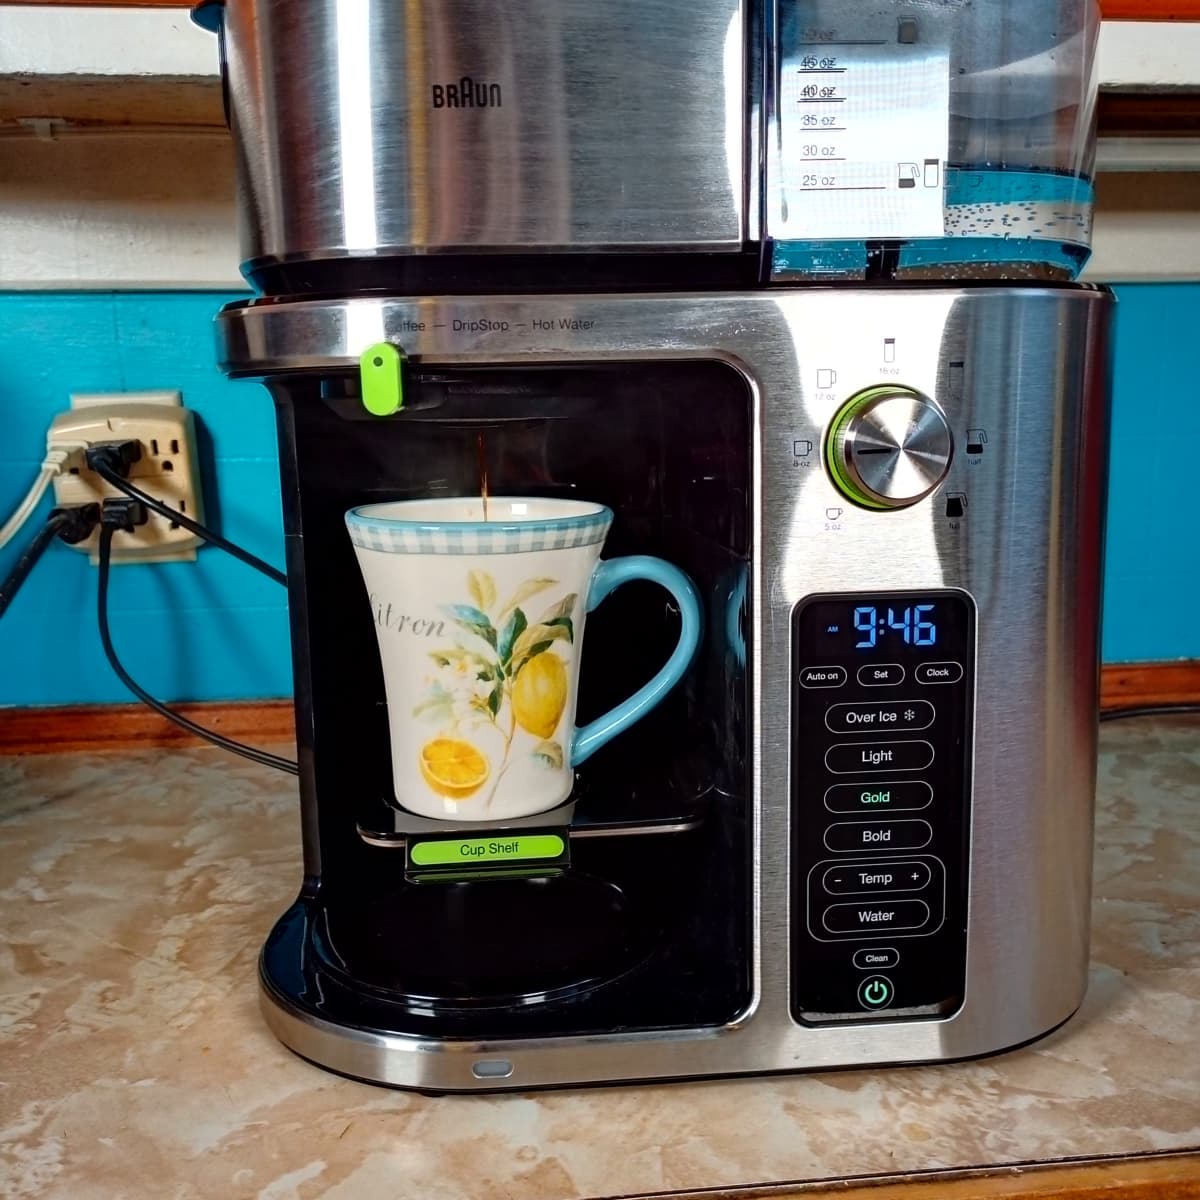 MultiServe Coffee Machine